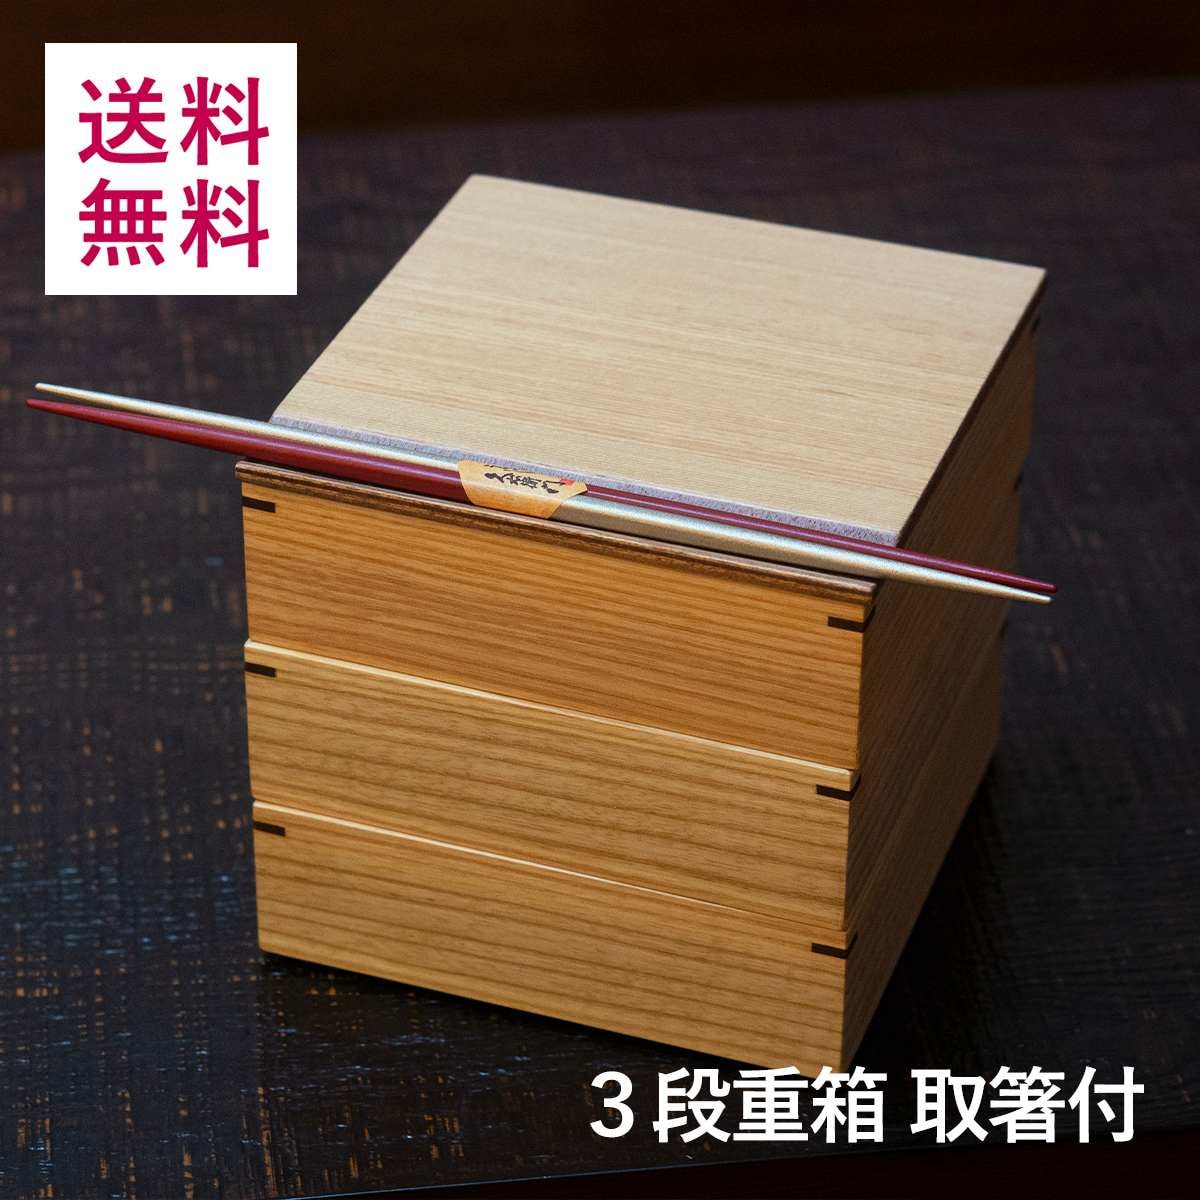 Qoo10 日本産白木三段重5 5寸 キッチン用品